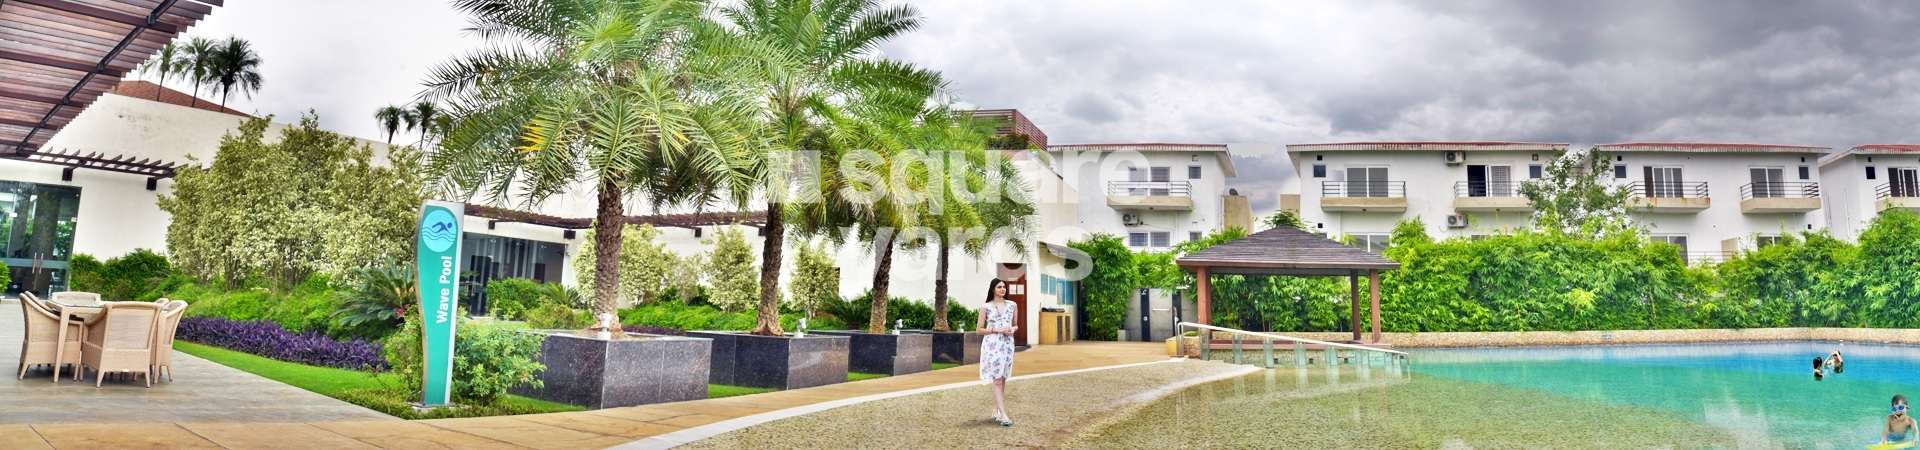 paramount golfforeste villas project amenities features2